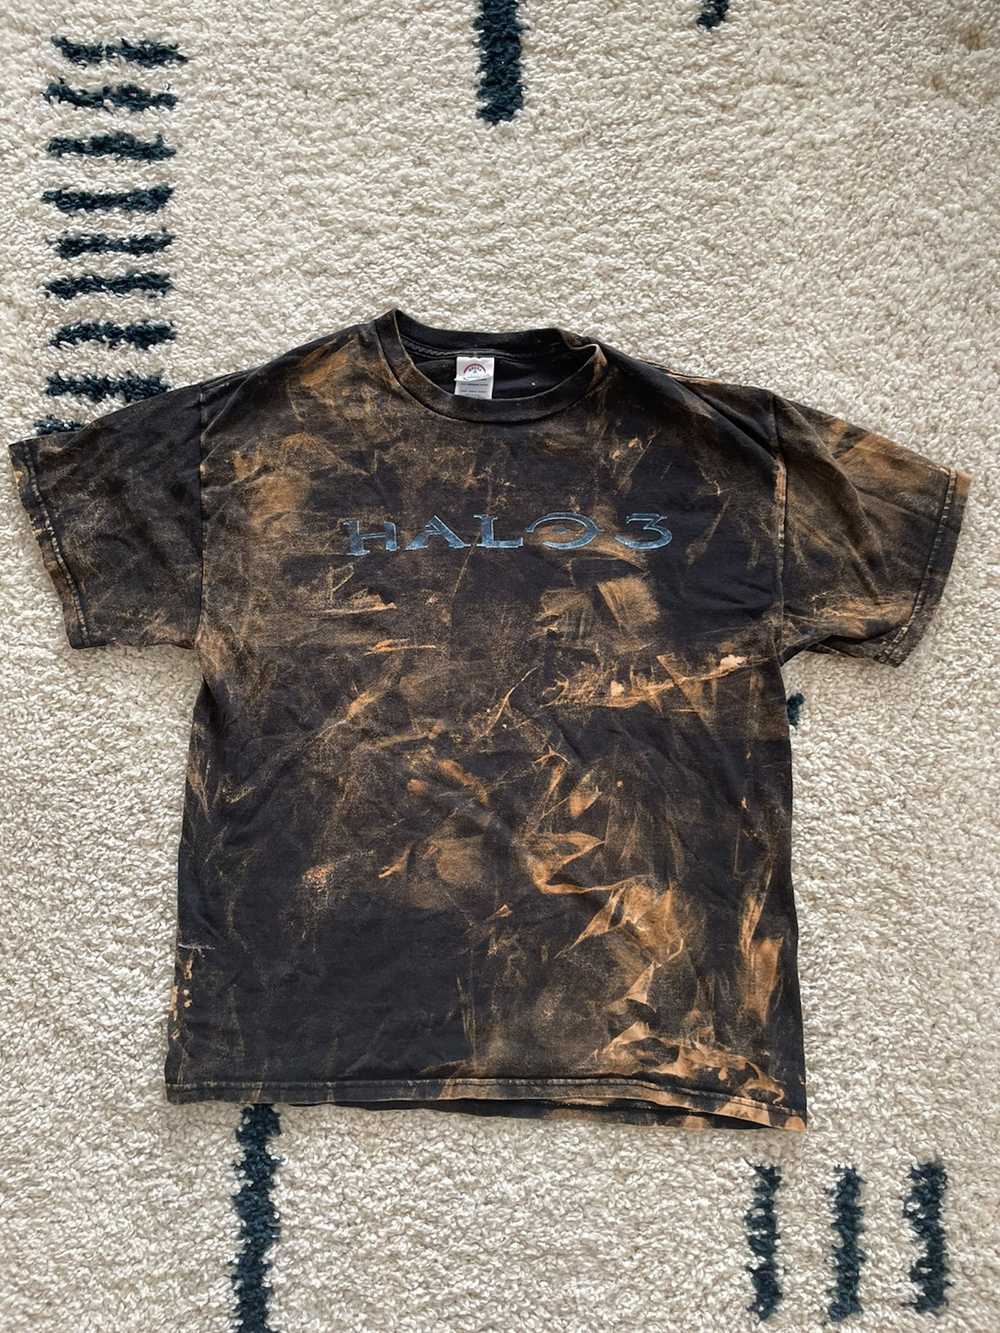 Delta Bleached Halo 3 Promo T-Shirt Vintage - image 1